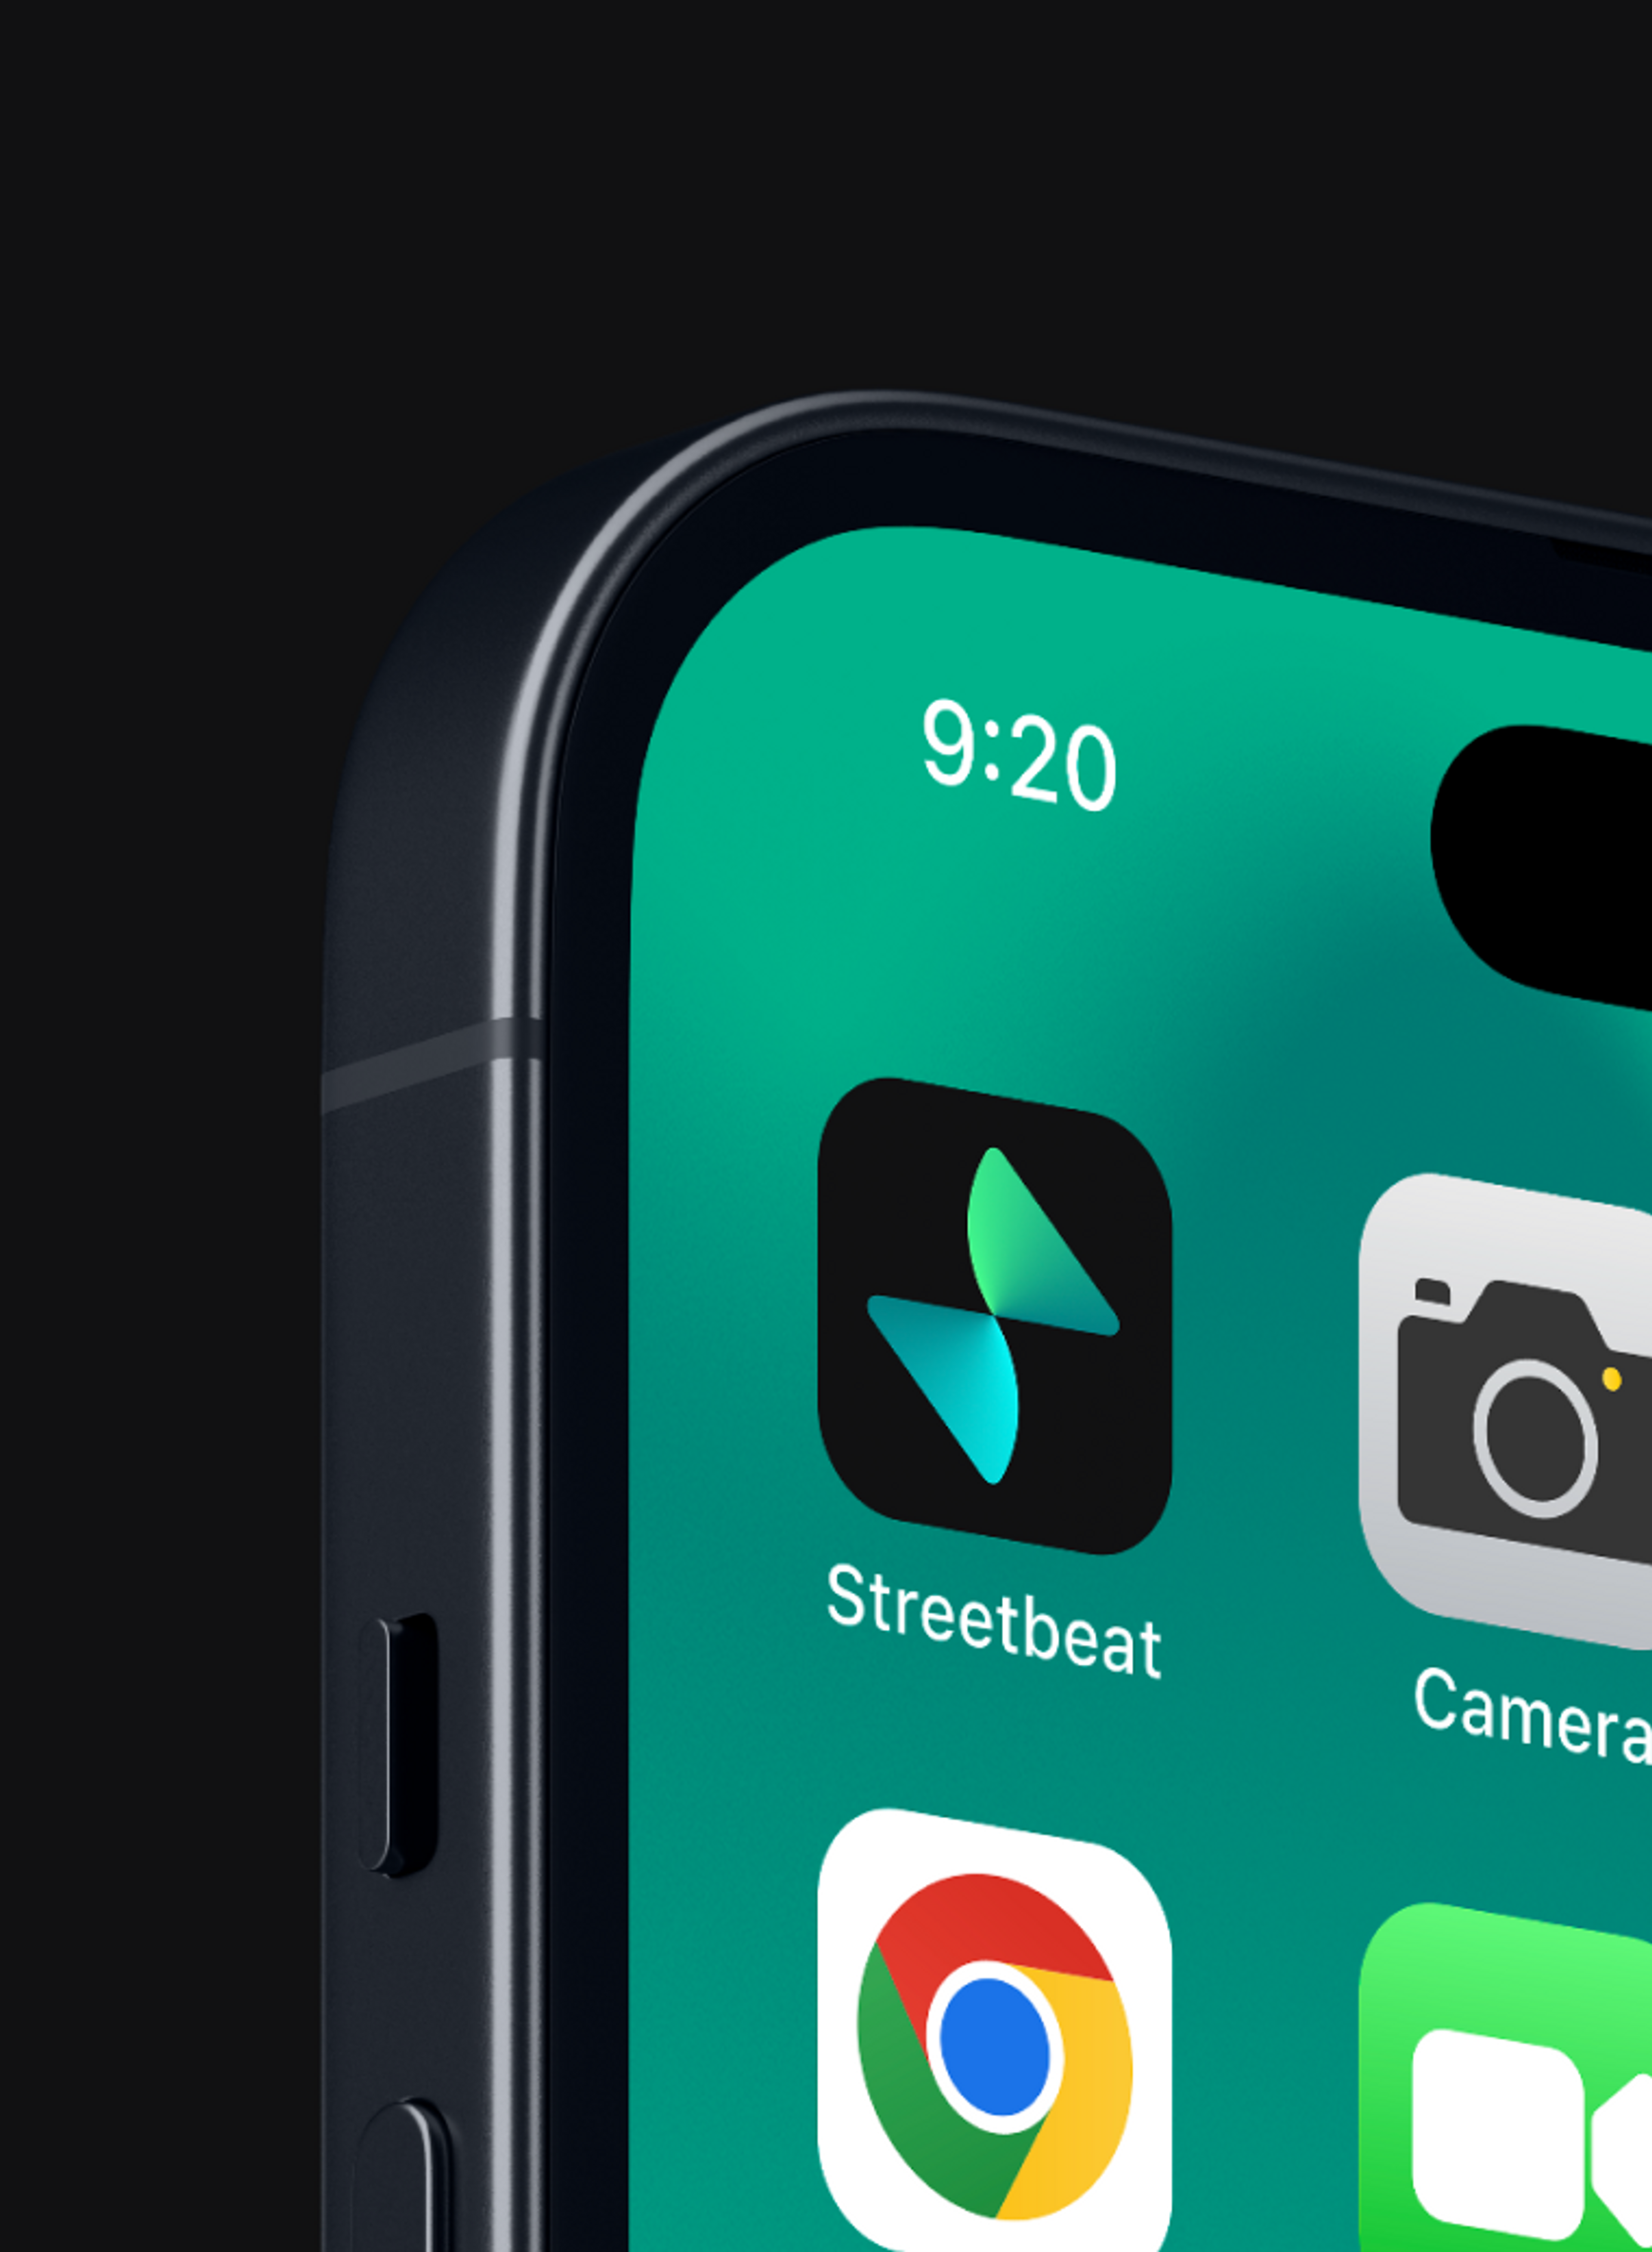 Streetbeat app icon